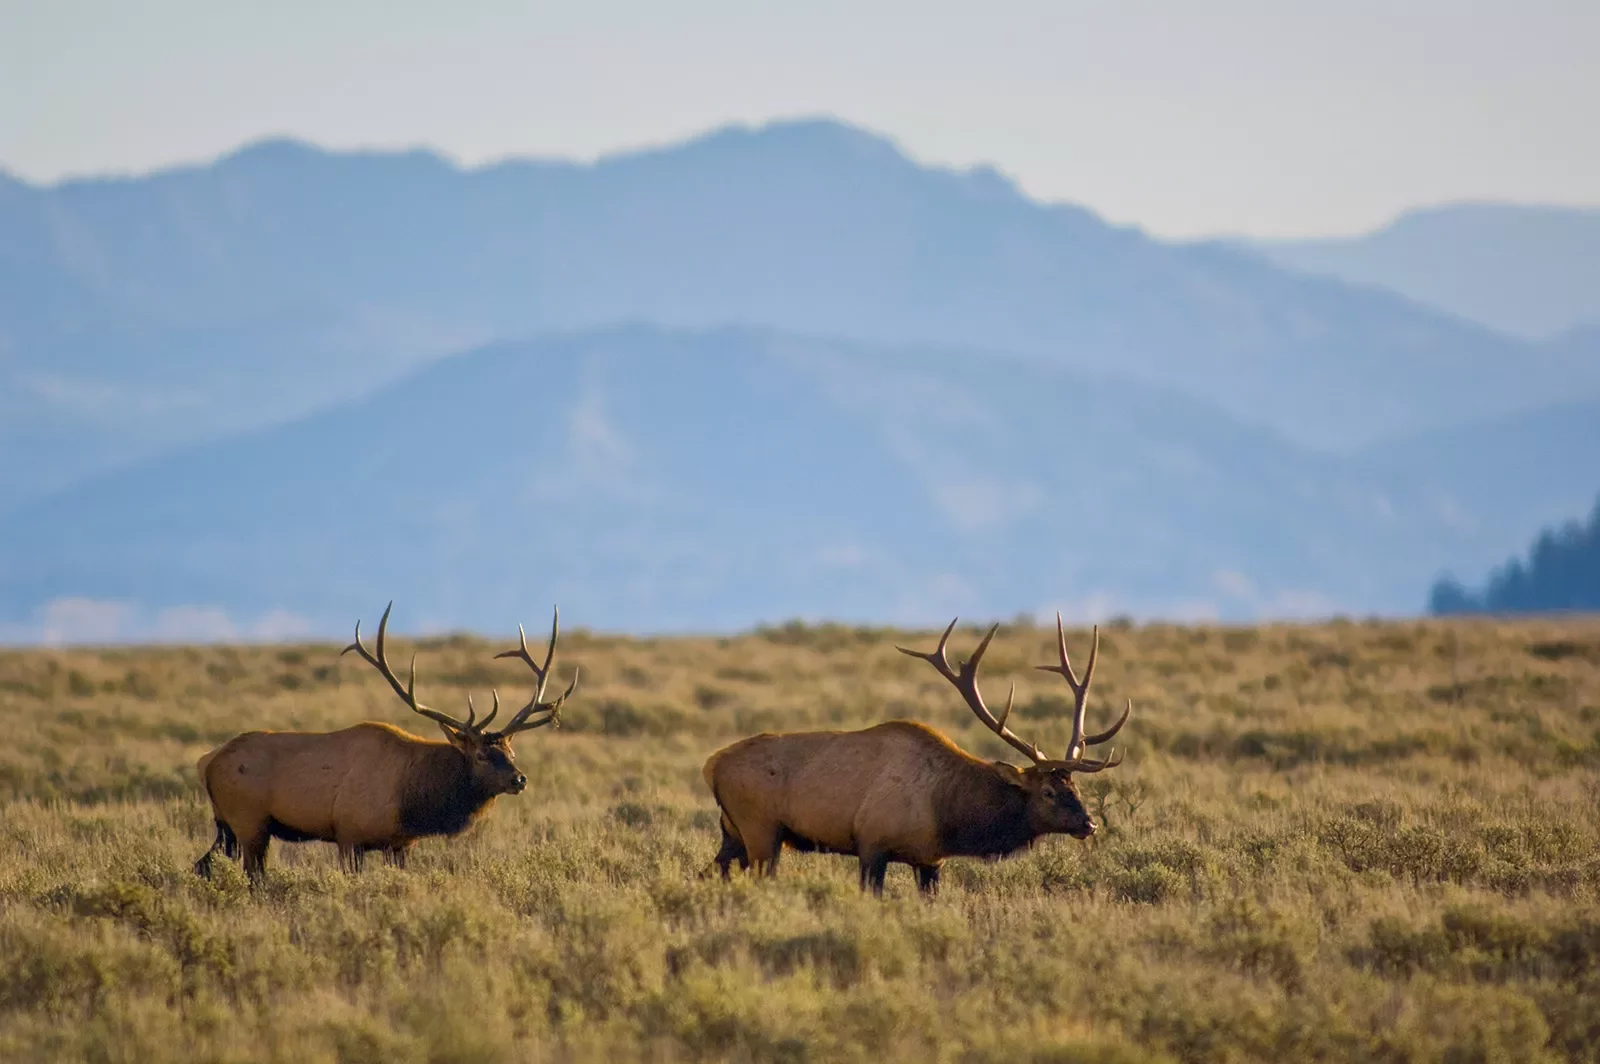 Large elk traversing through golden fields